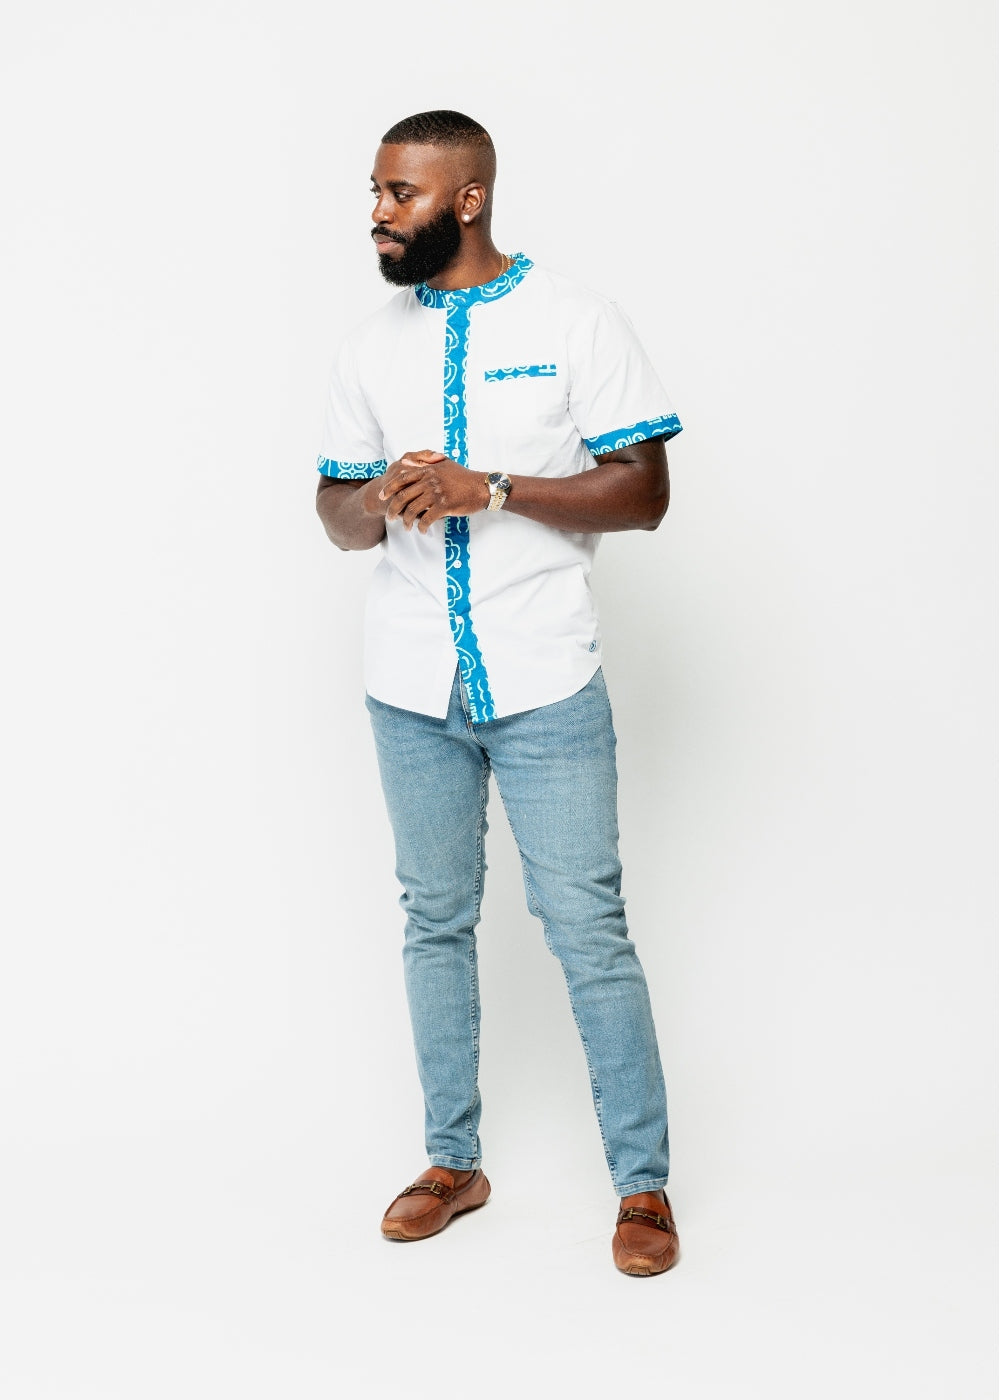 Mandari Men's African Print Color-Blocked Button-Up Shirt (White/Cool Blue Adire)